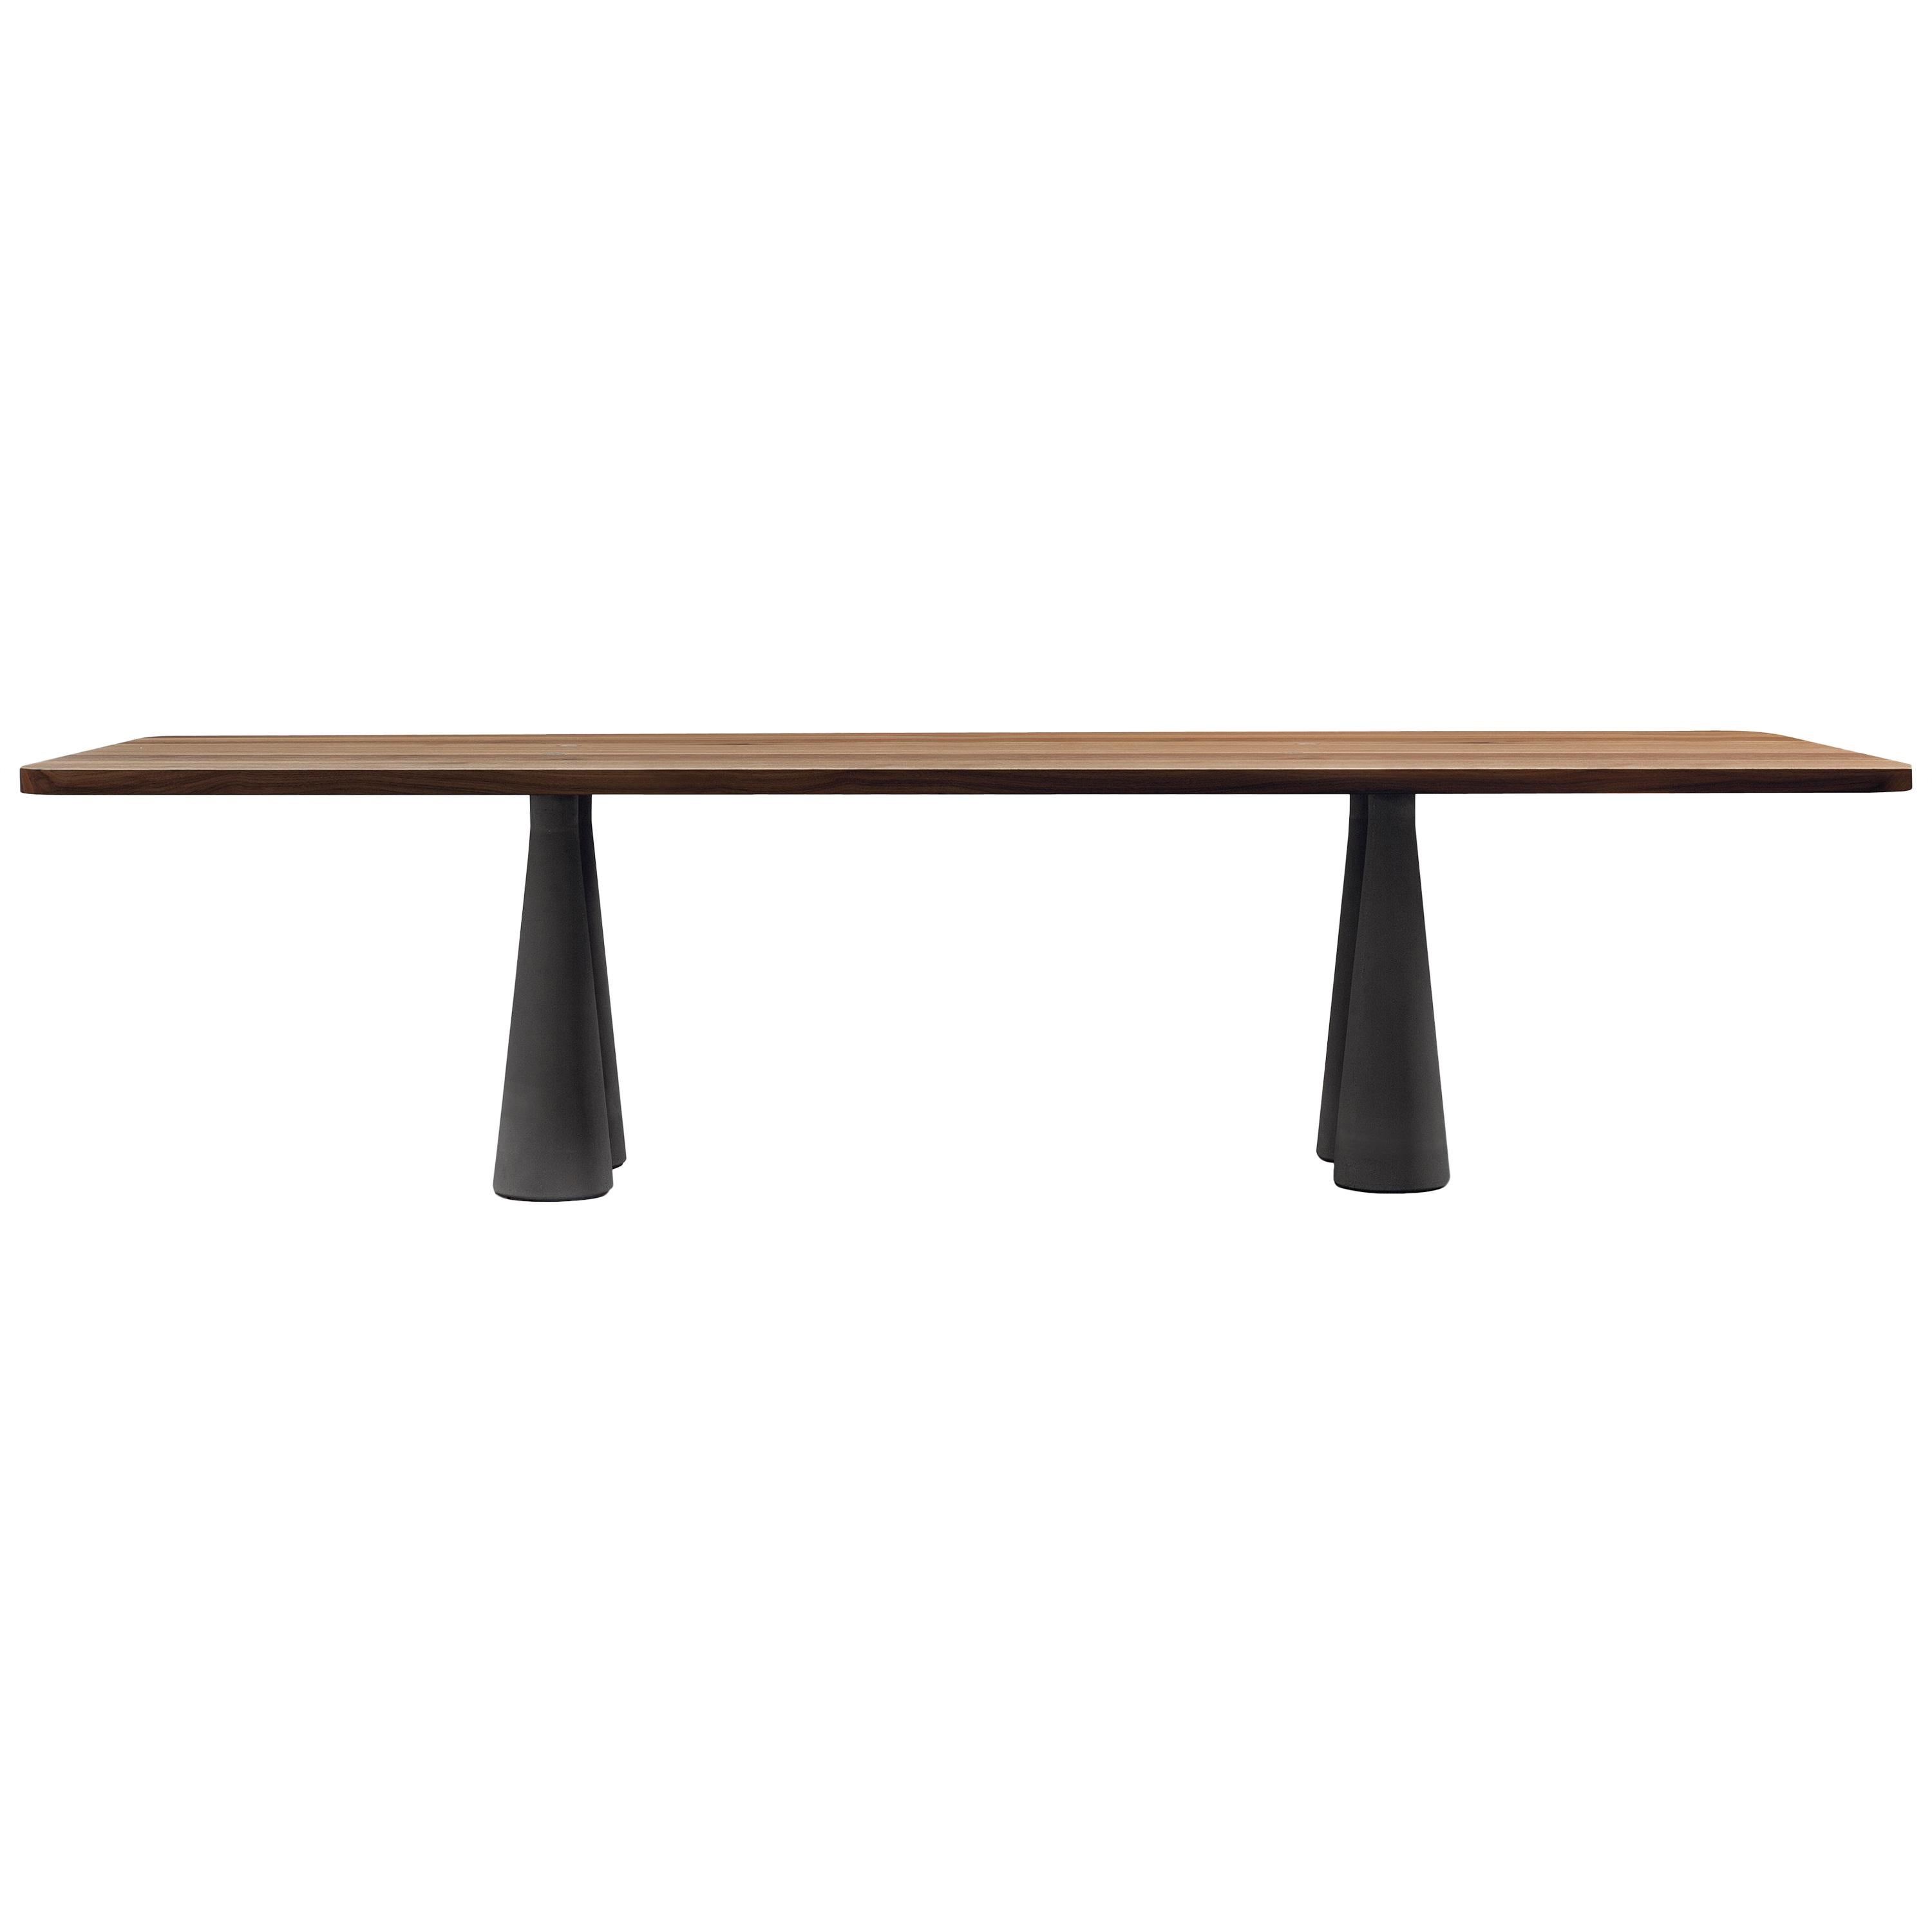 Bonaldo Still Table in Solid Walnut Wood by Bartoli Design For Sale